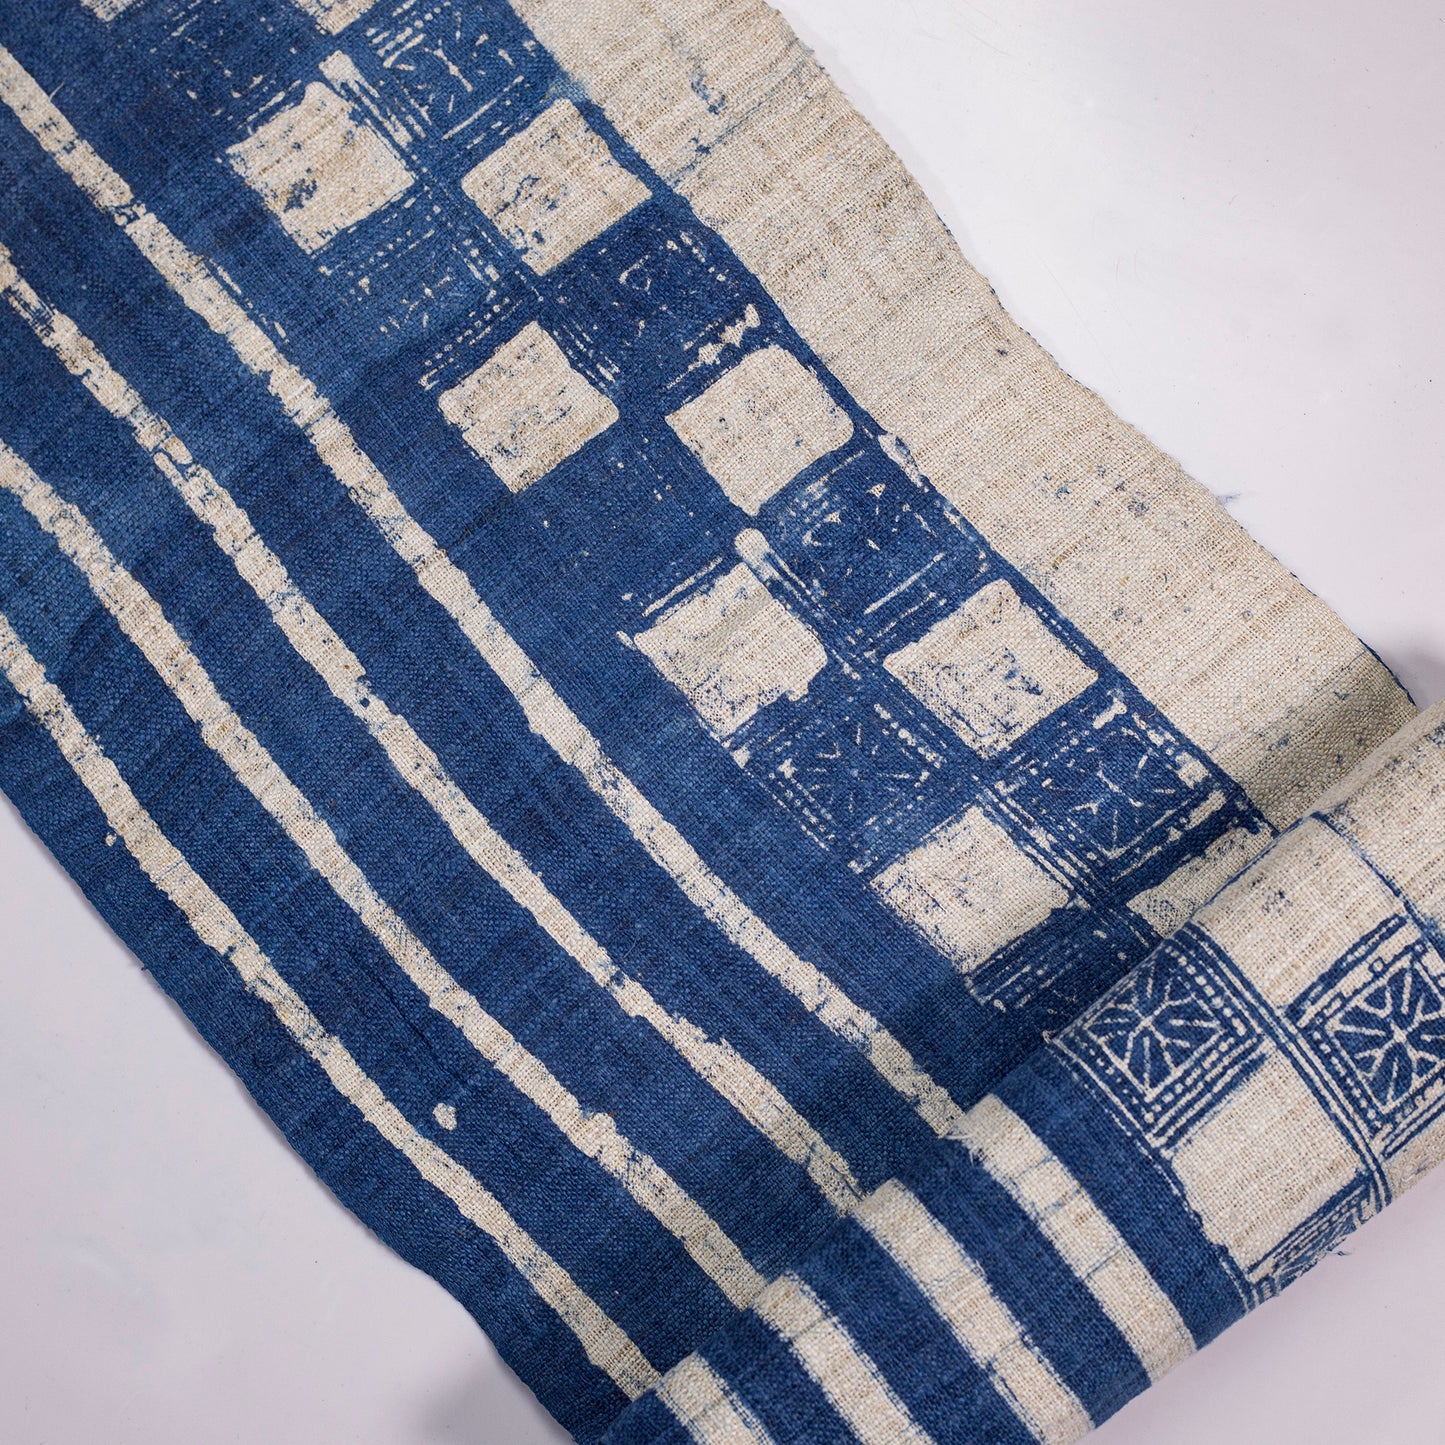 Handwoven hemp fabric, batik indigo color, H'mong pattern in blue and white